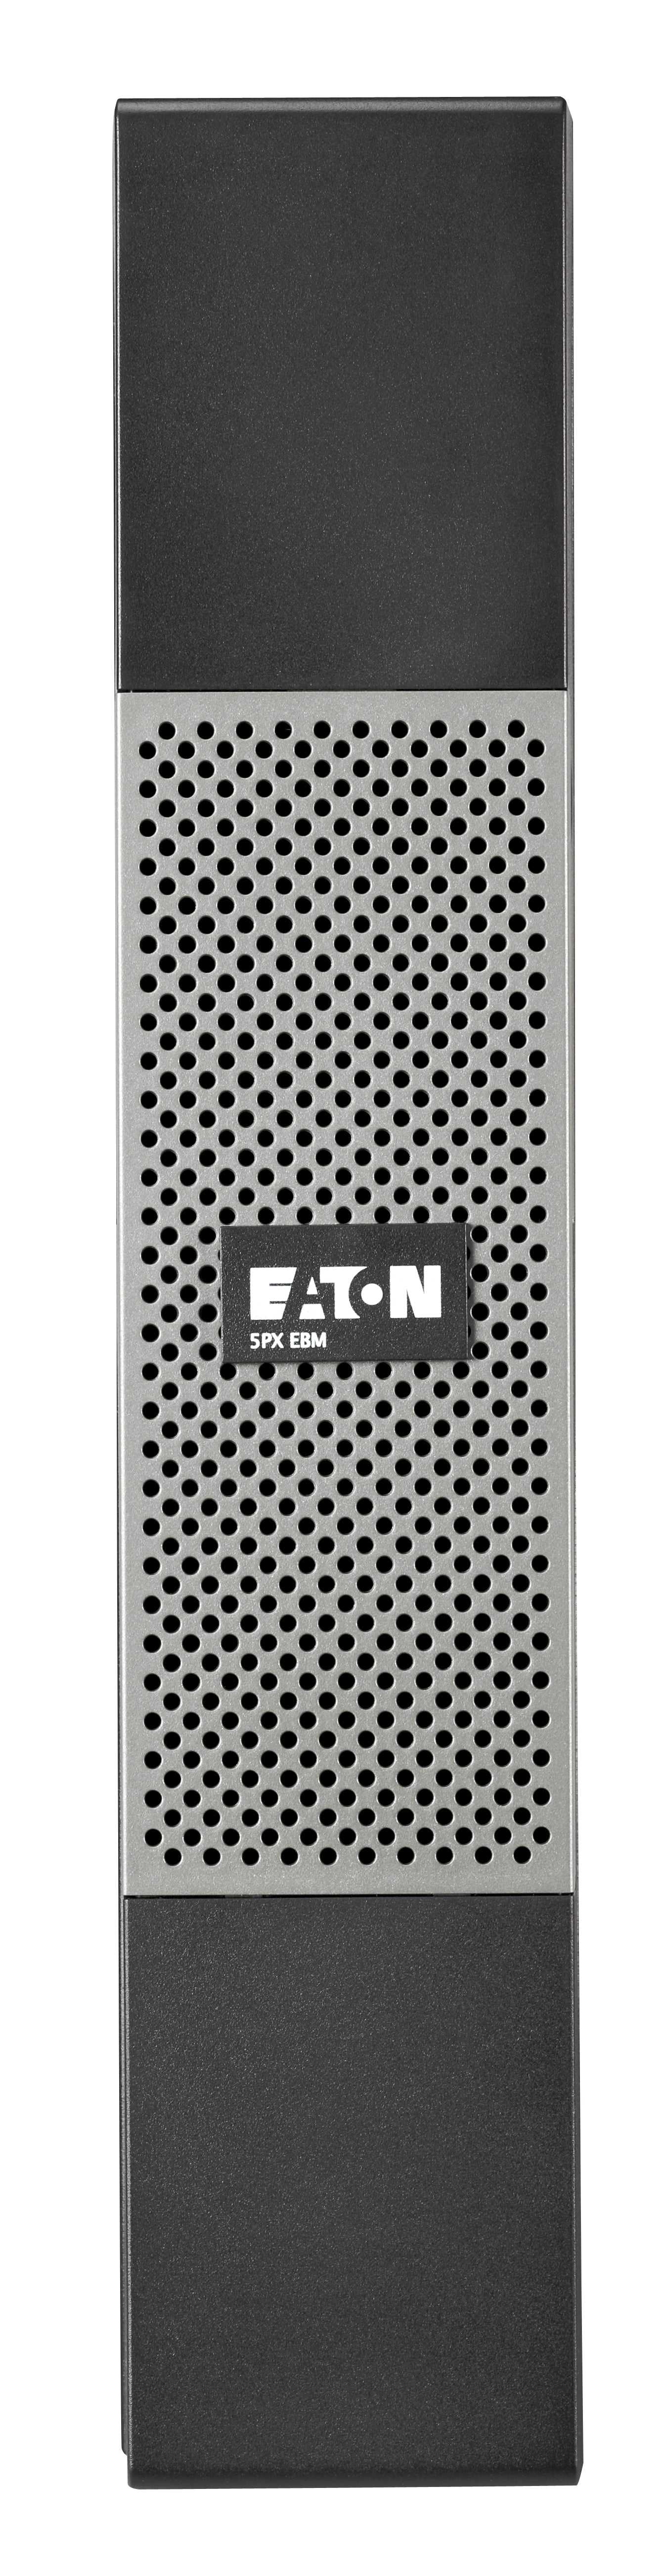 Eaton, Eaton 5Px Ebm 48V Rt2U Sealed Lead Acid (Vrla)